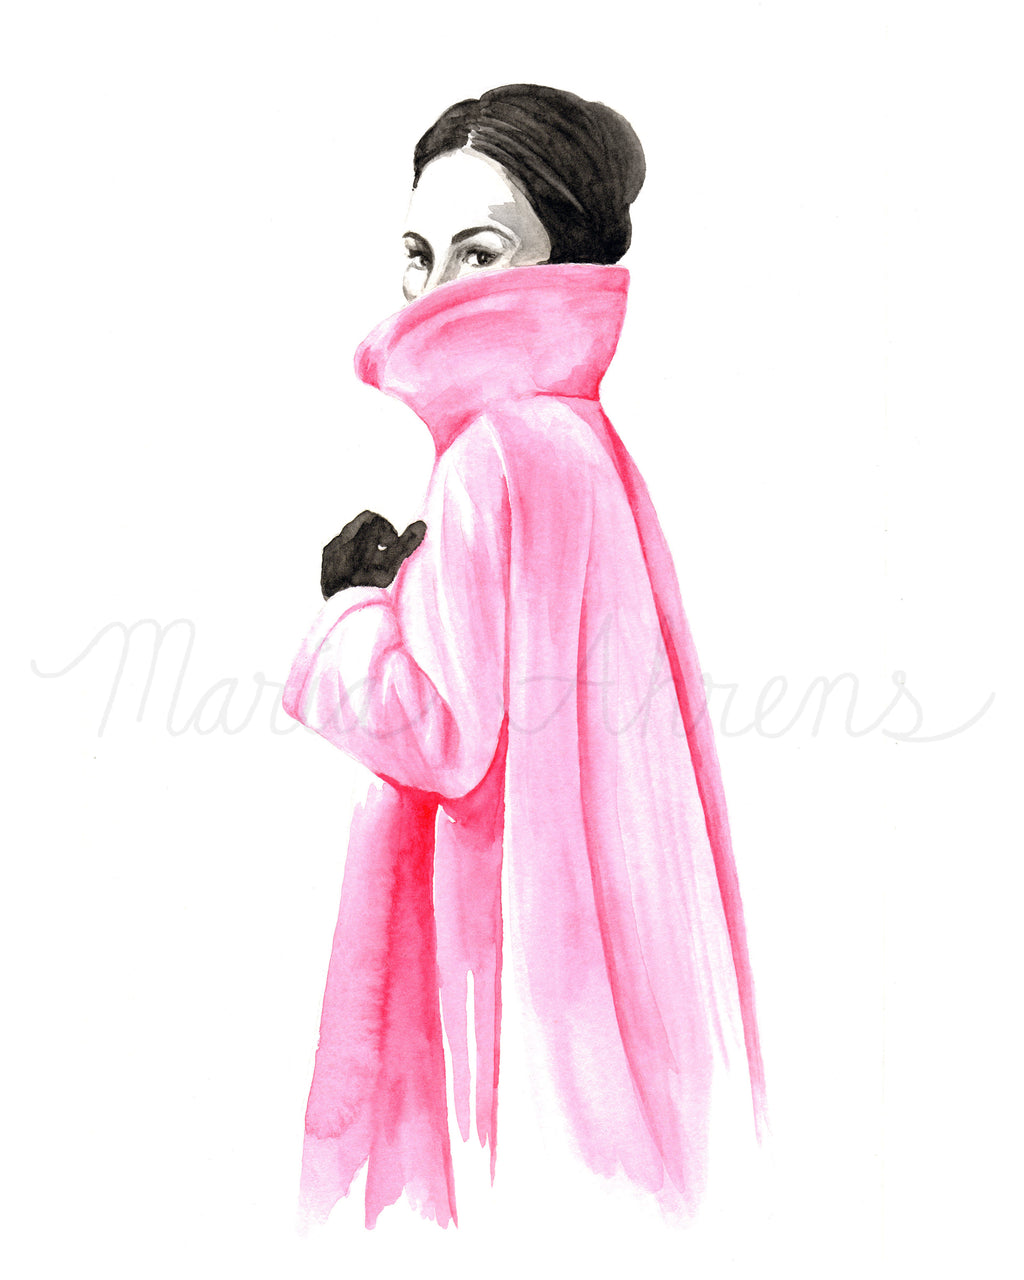 Pink Coat Leaving Fashion Illustration Watercolor Art Print